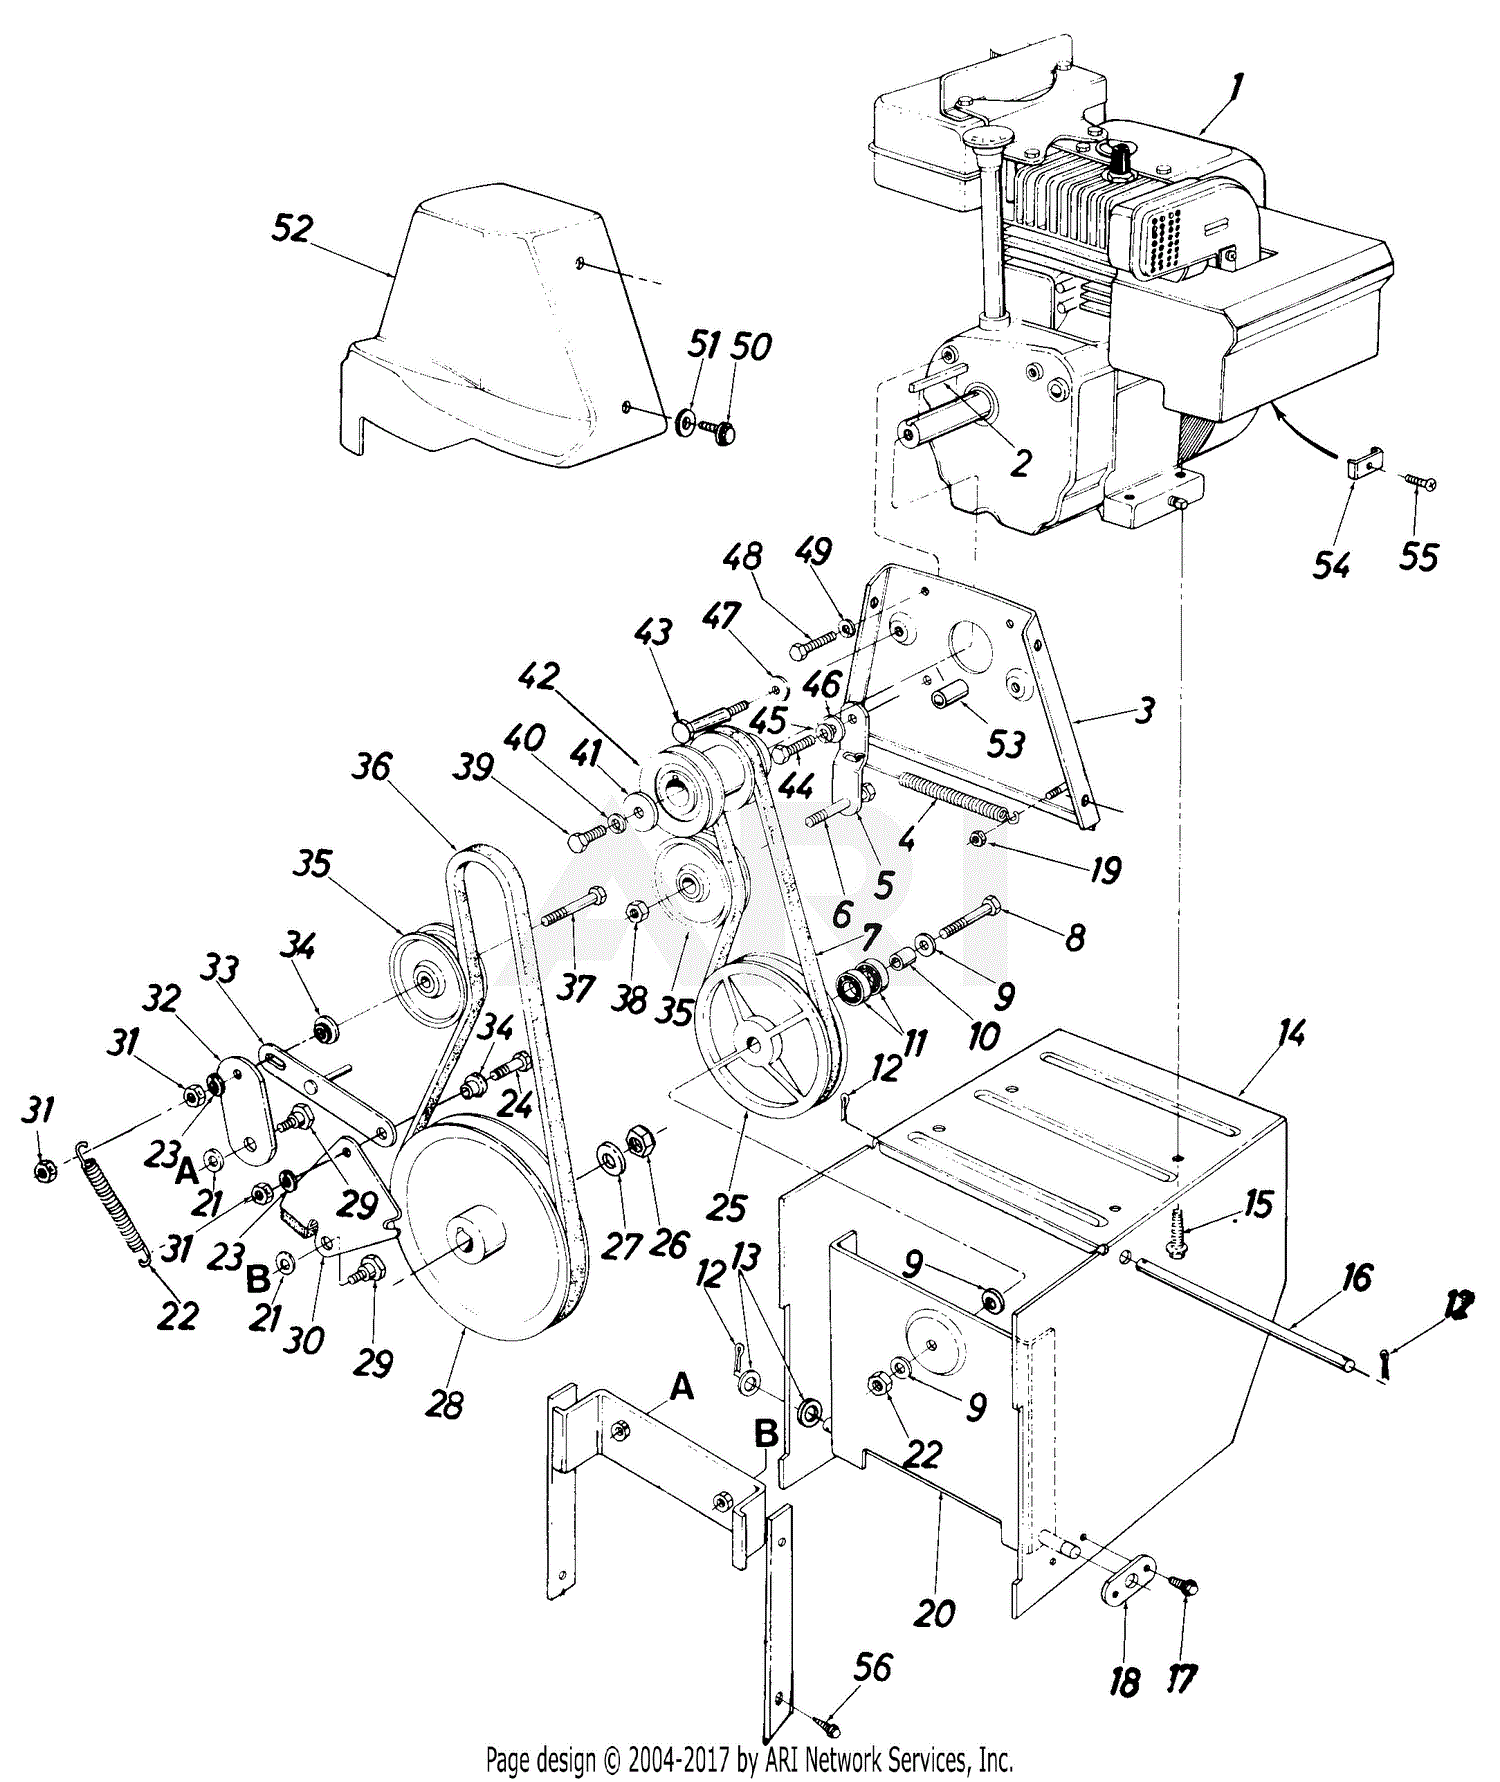 1979 mtd snowblower parts diagram